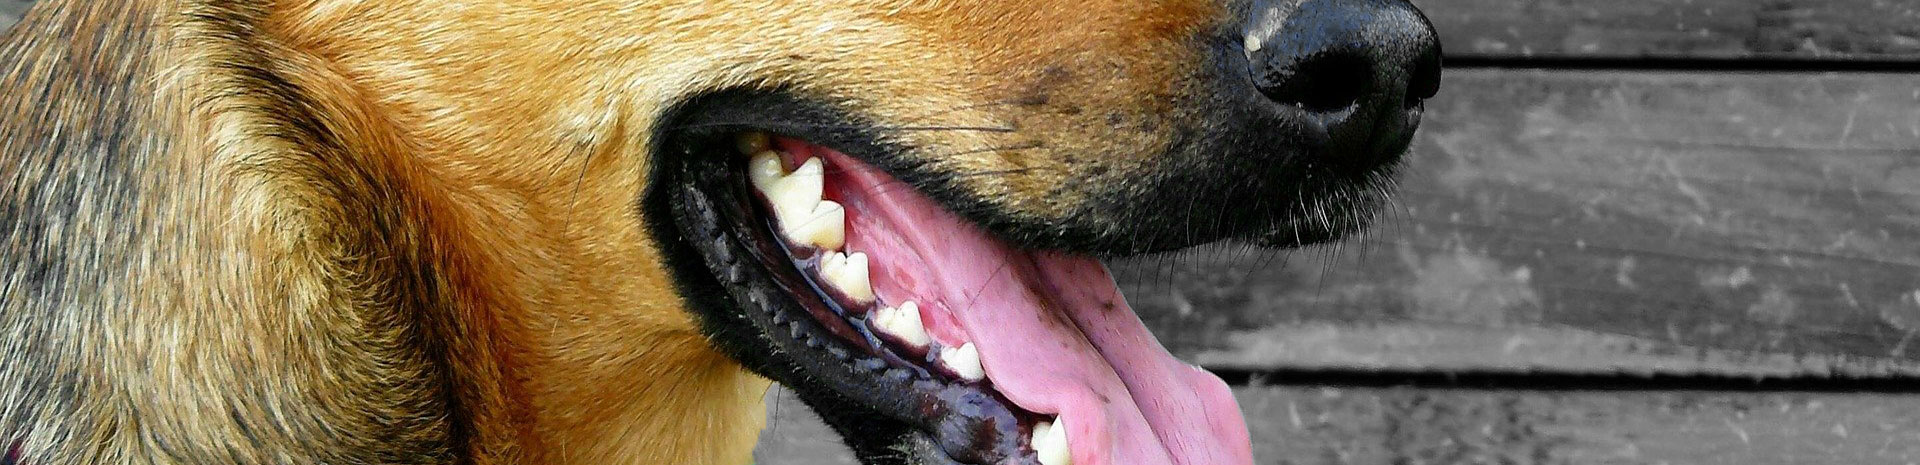 Toename verwacht in het aantal hondenbeten | Letselschadebureau LetselPro